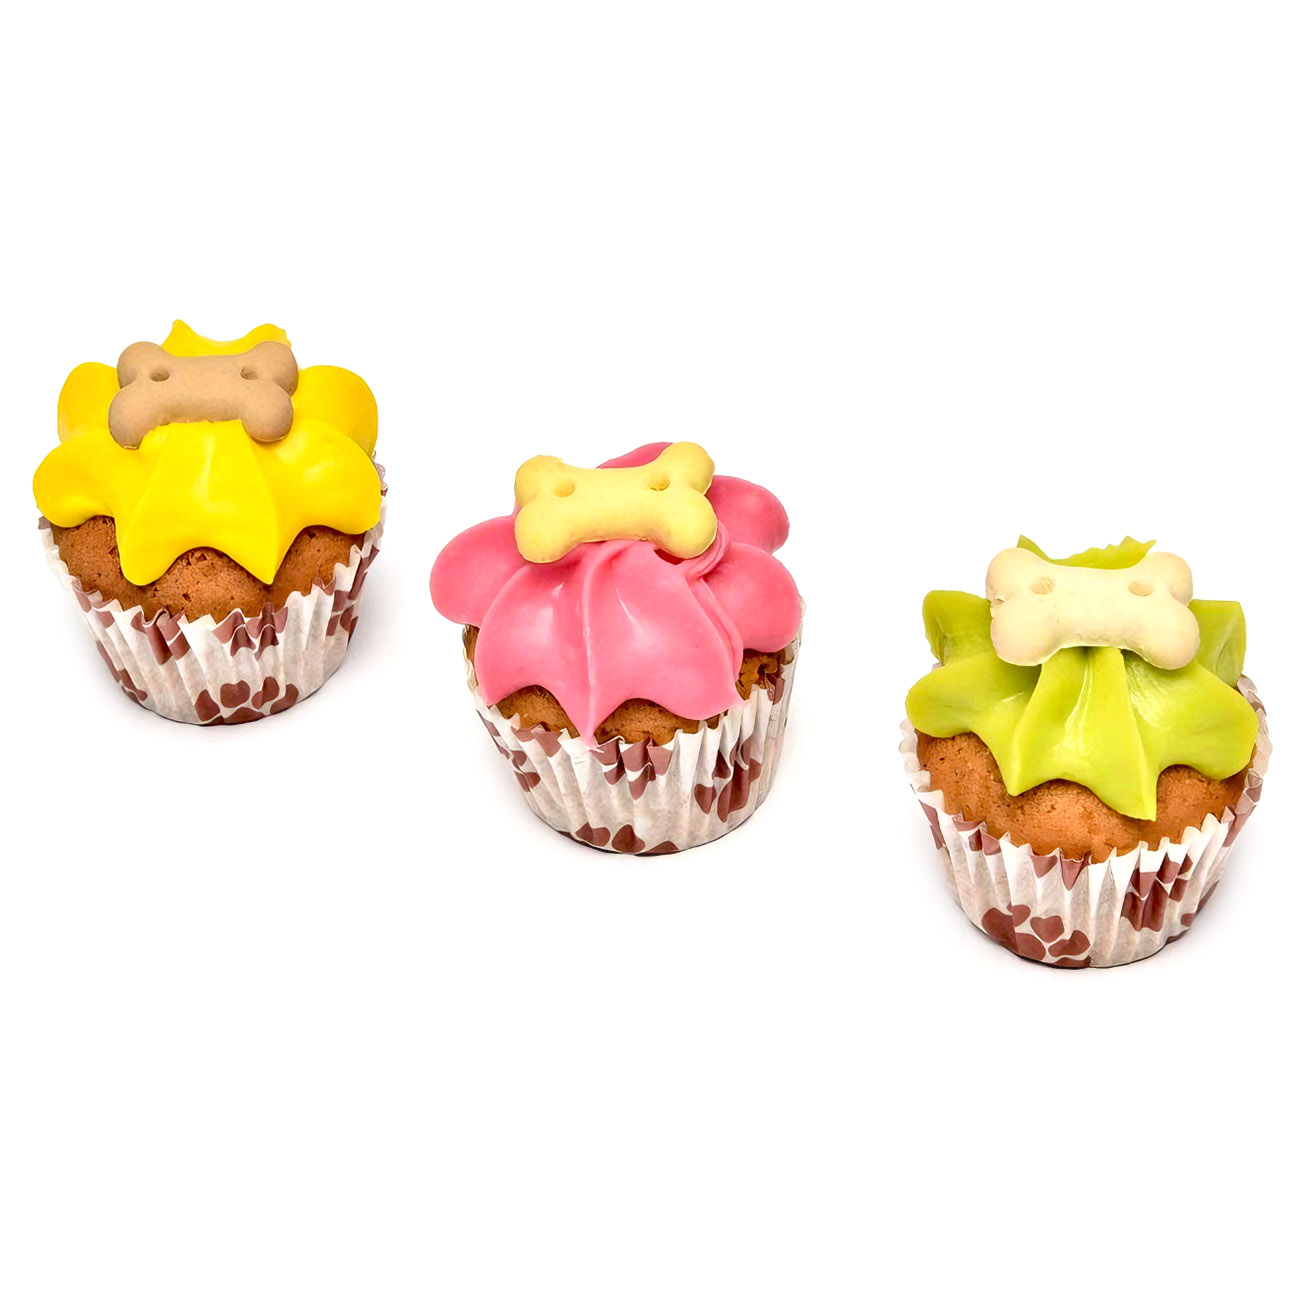 Spring Mini Cupcakes 3er - Barking Bakery